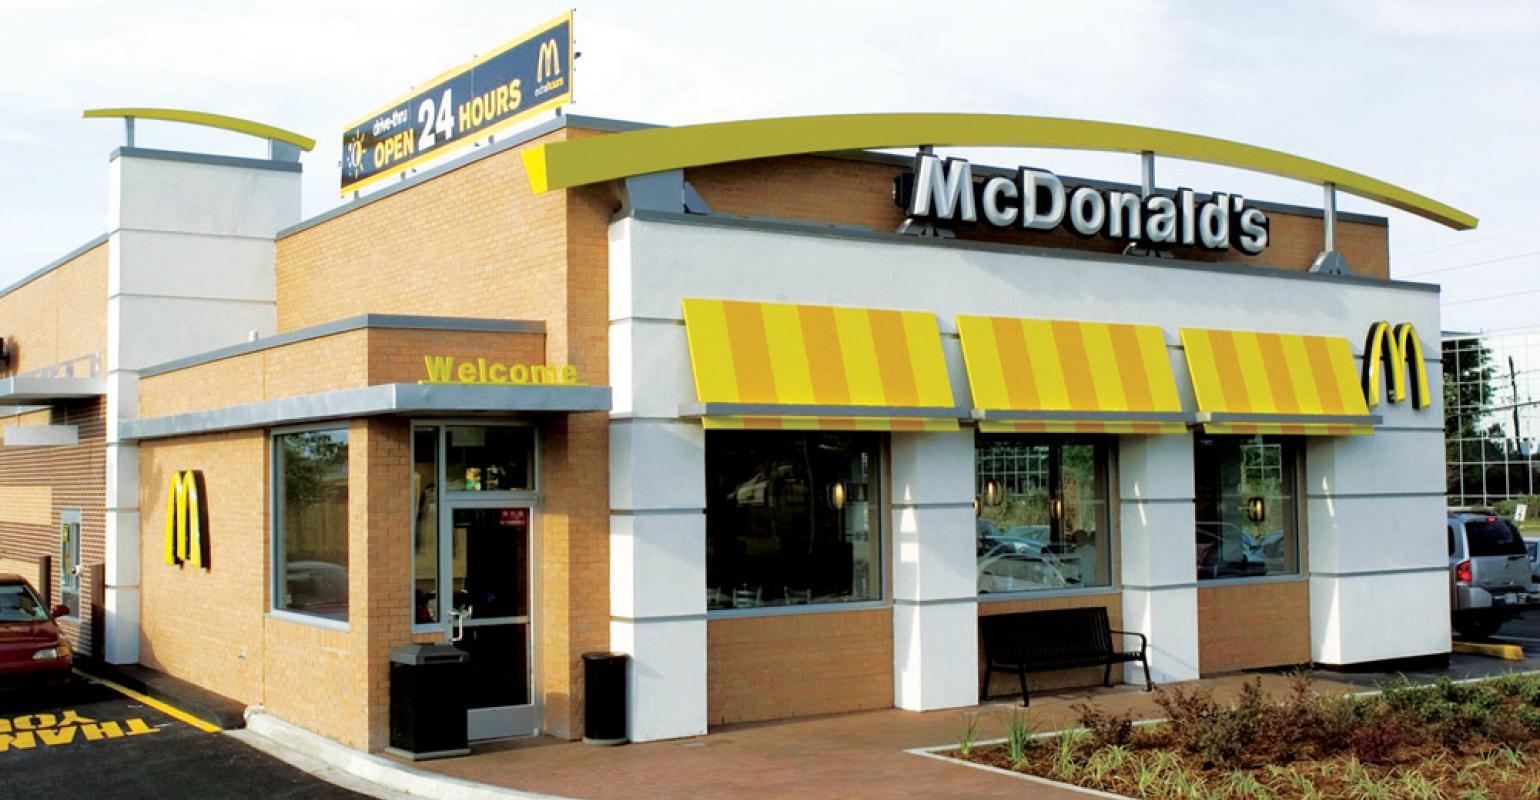 McDonalds-Updates-workforce-on-diversity-goal-progress.jpg